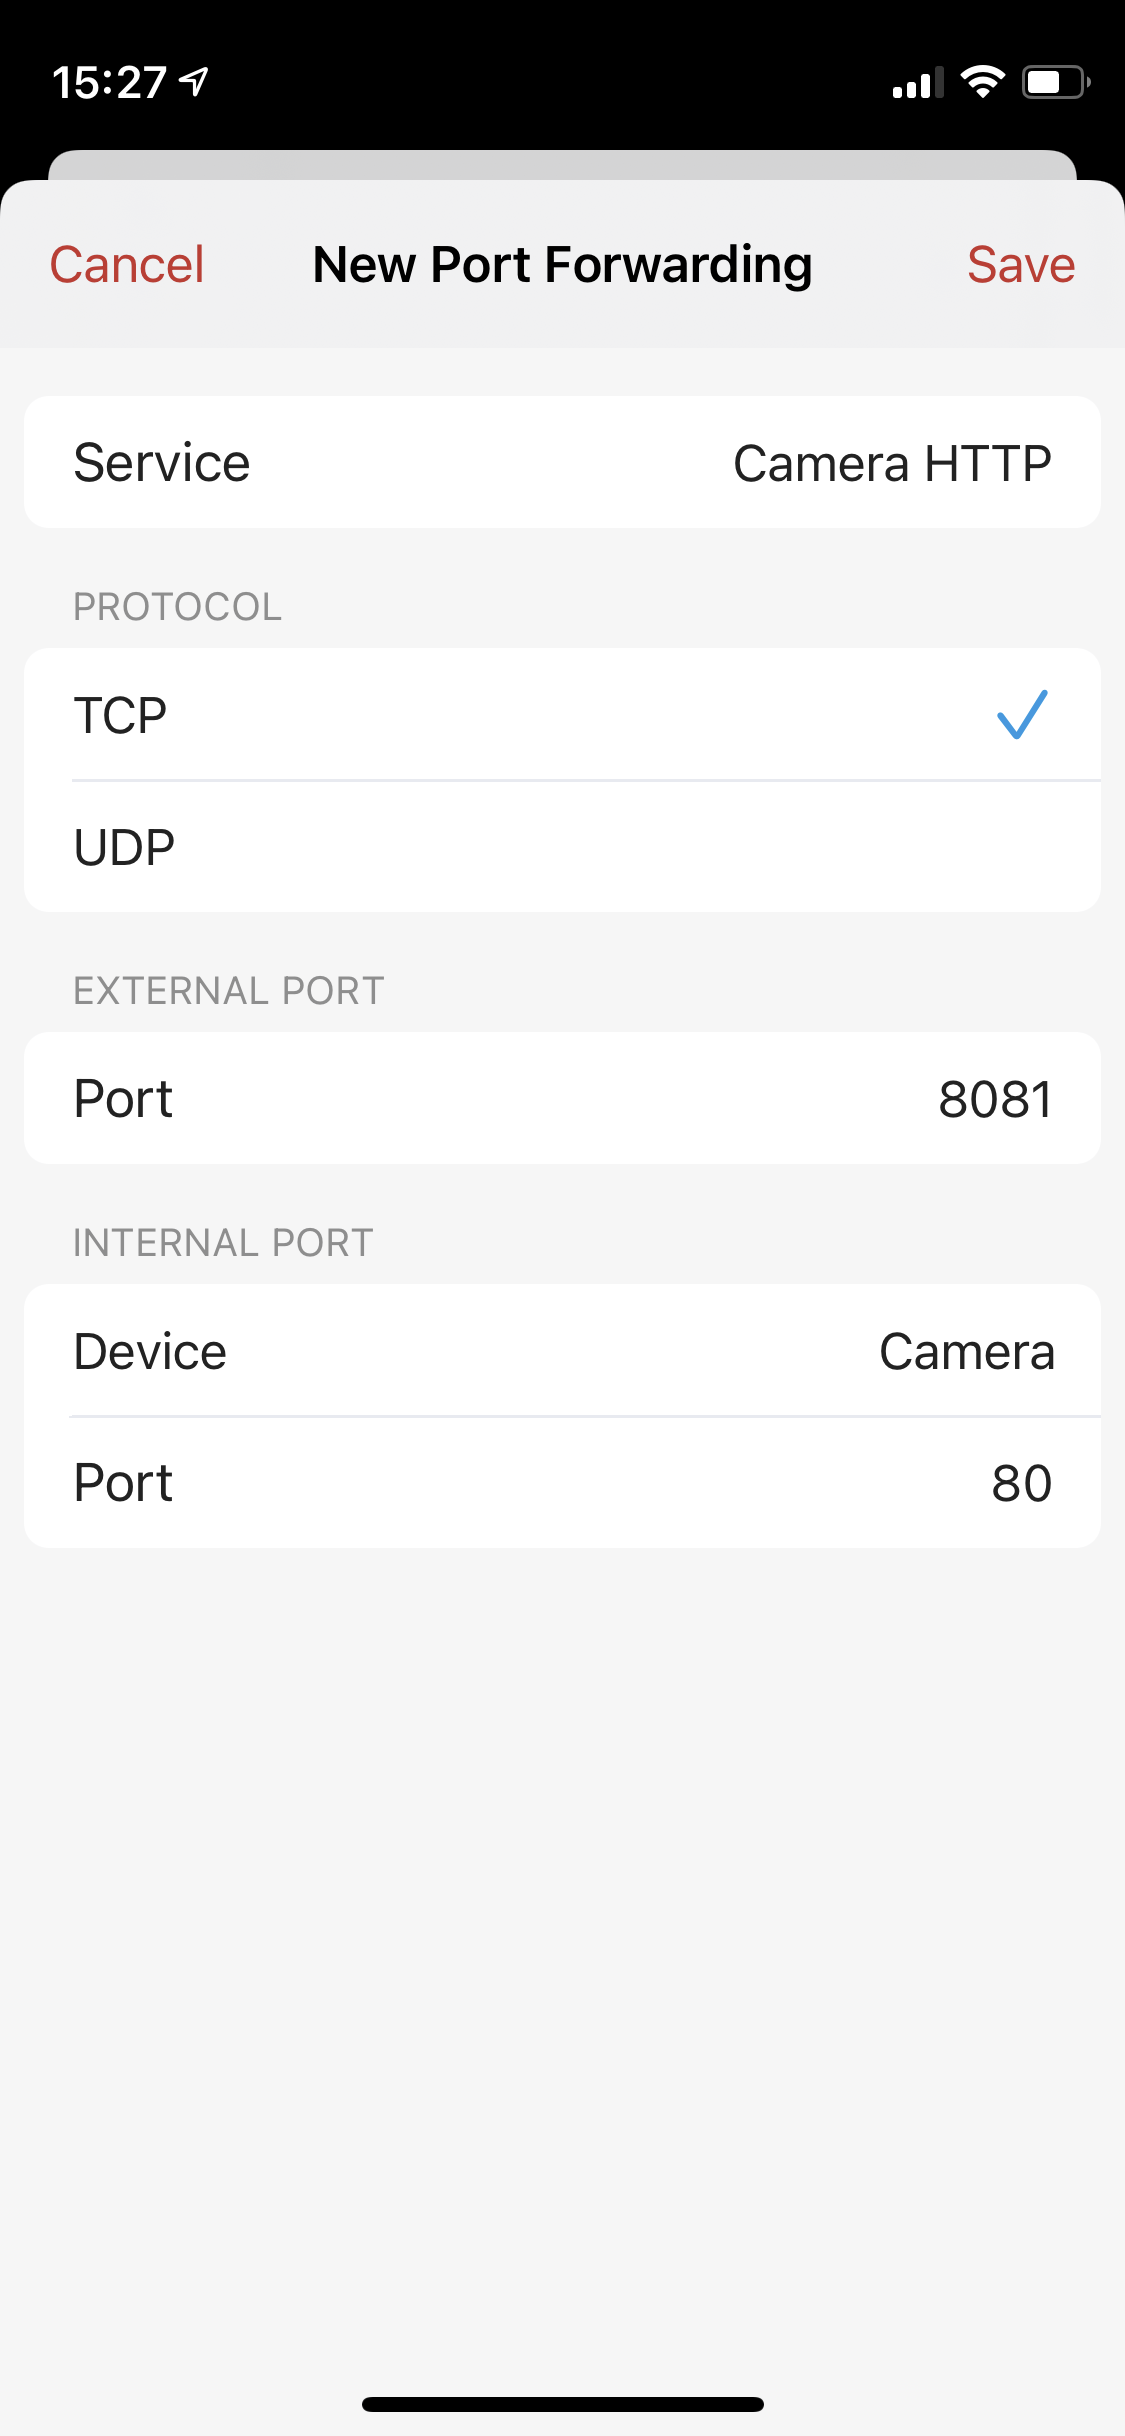 New Port Forwarding settings for Camera device